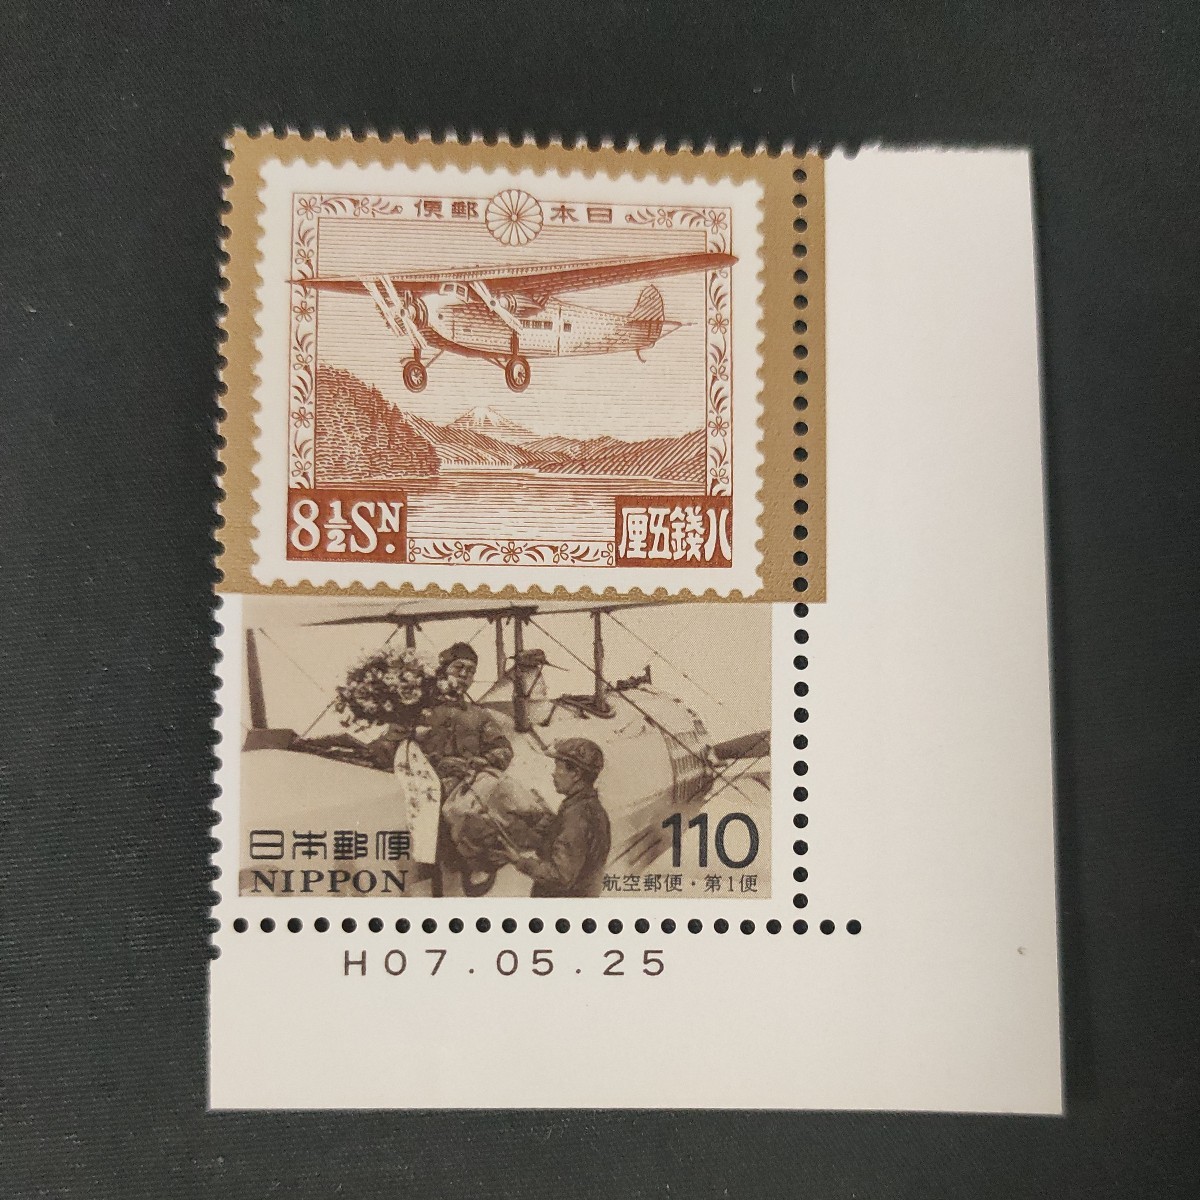 * progress of postal stamp series.(1994 year ). no. 4 compilation..no lake aviation 8.1/2 sen. Heisei era 6 year. beautiful goods. commemorative stamp. Heisei era stamps. stamp.